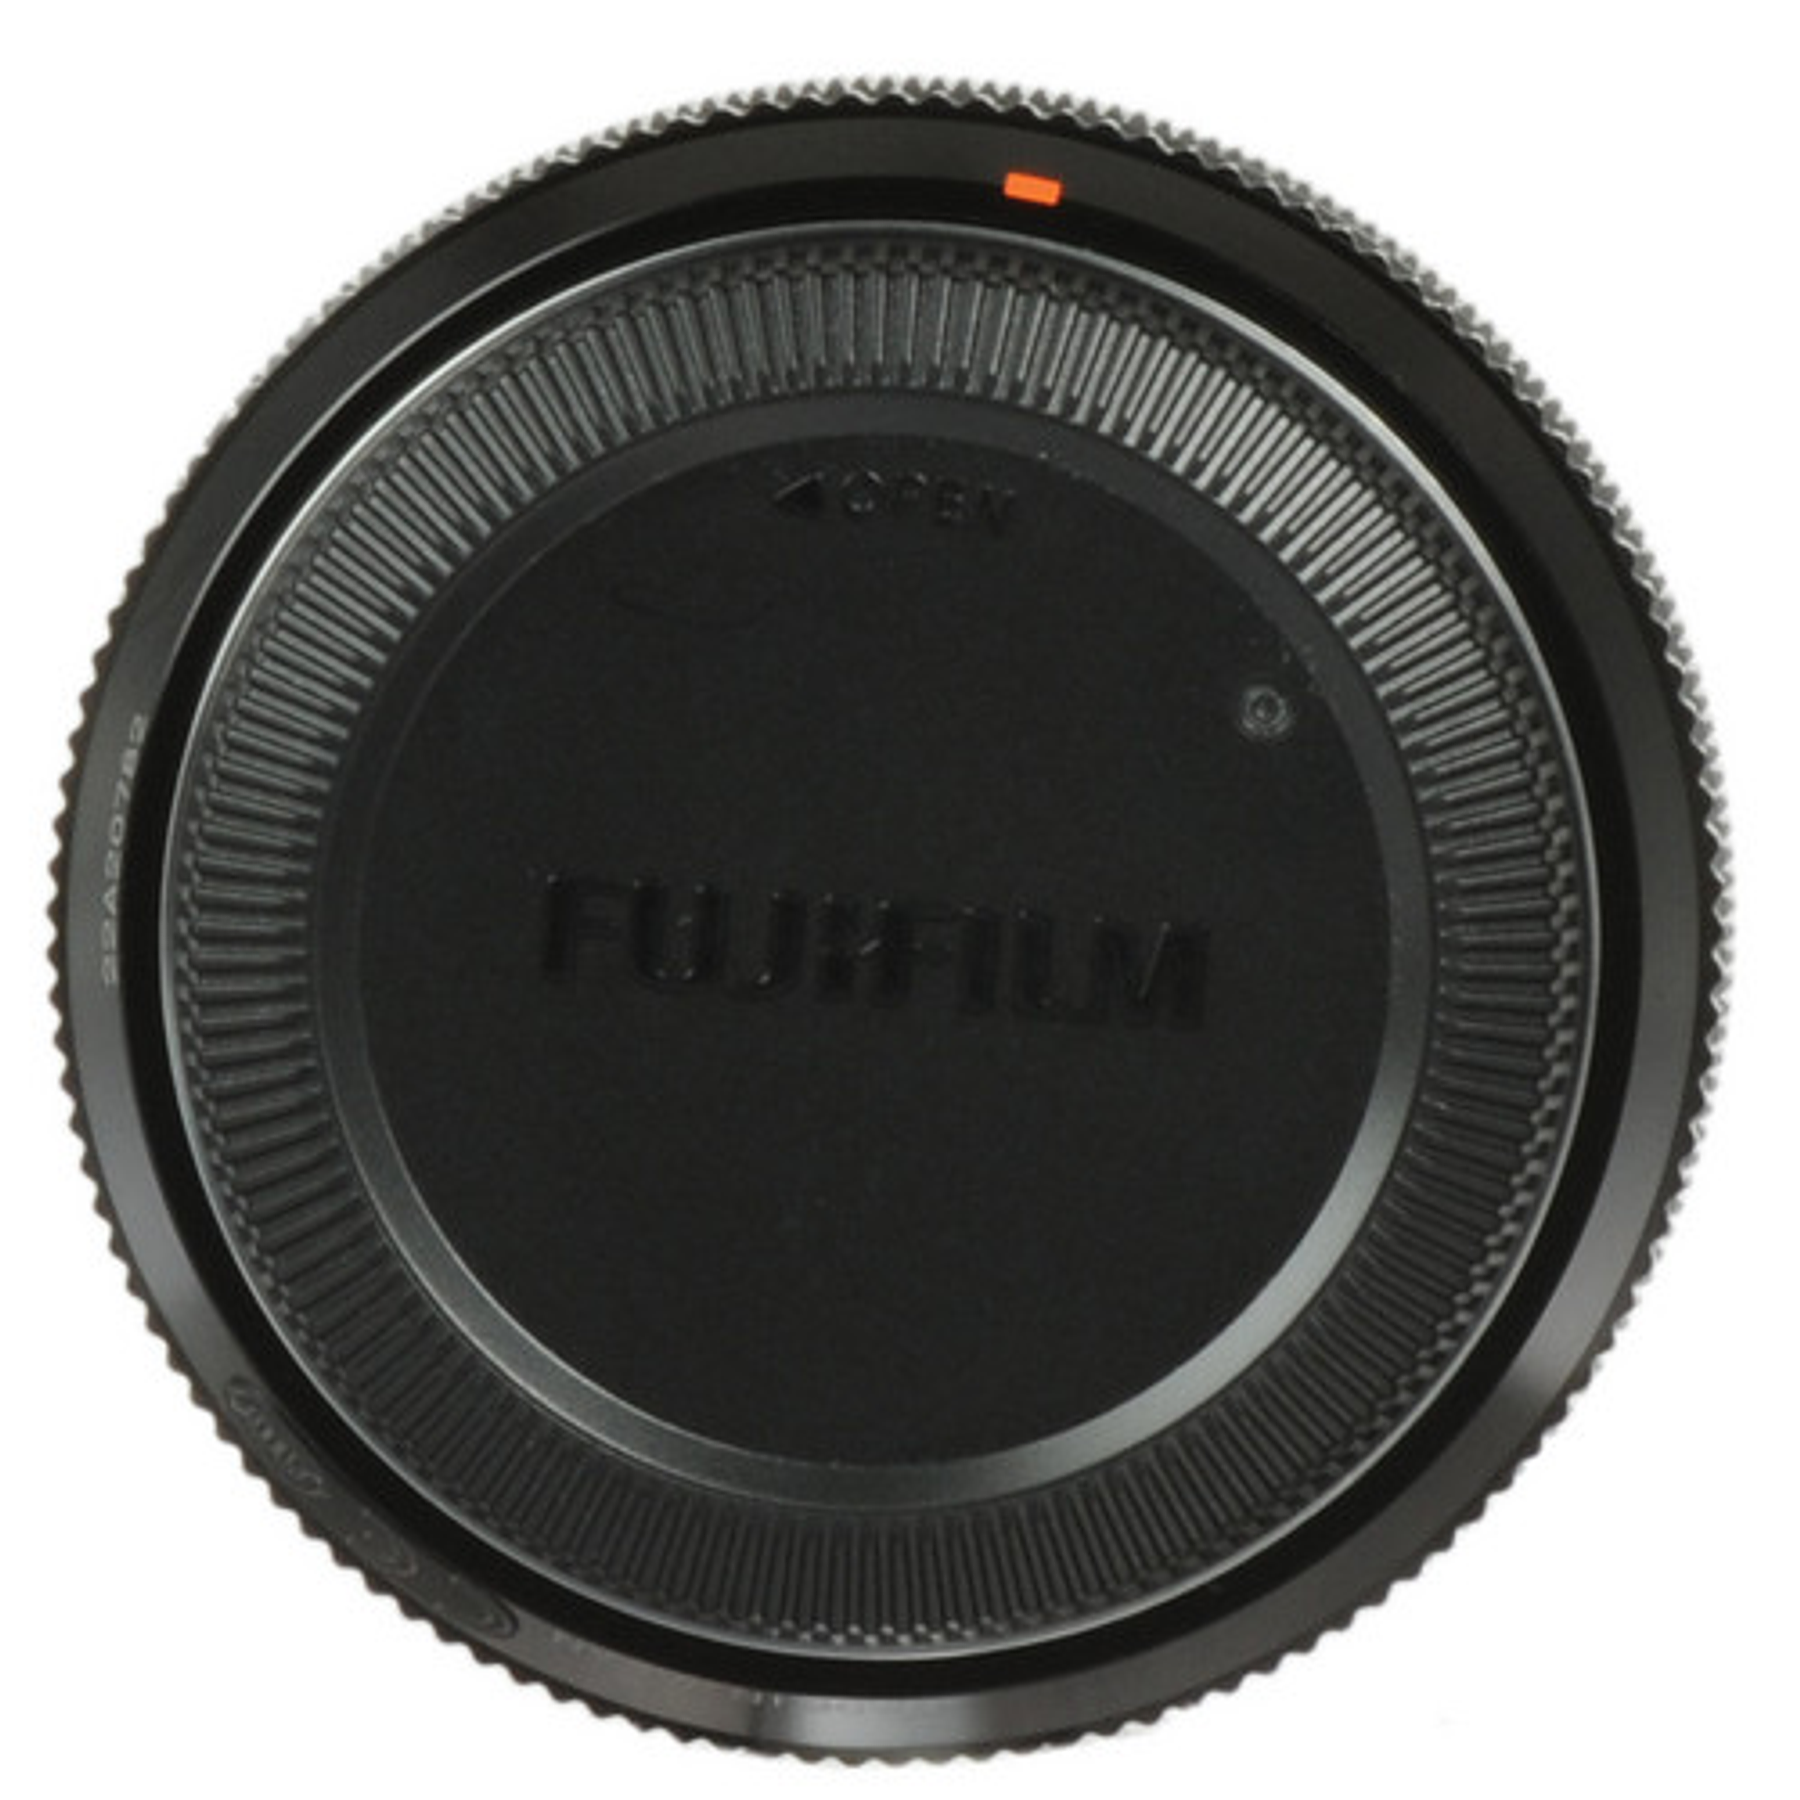 Fujifilm XF 35mm f1.4 R